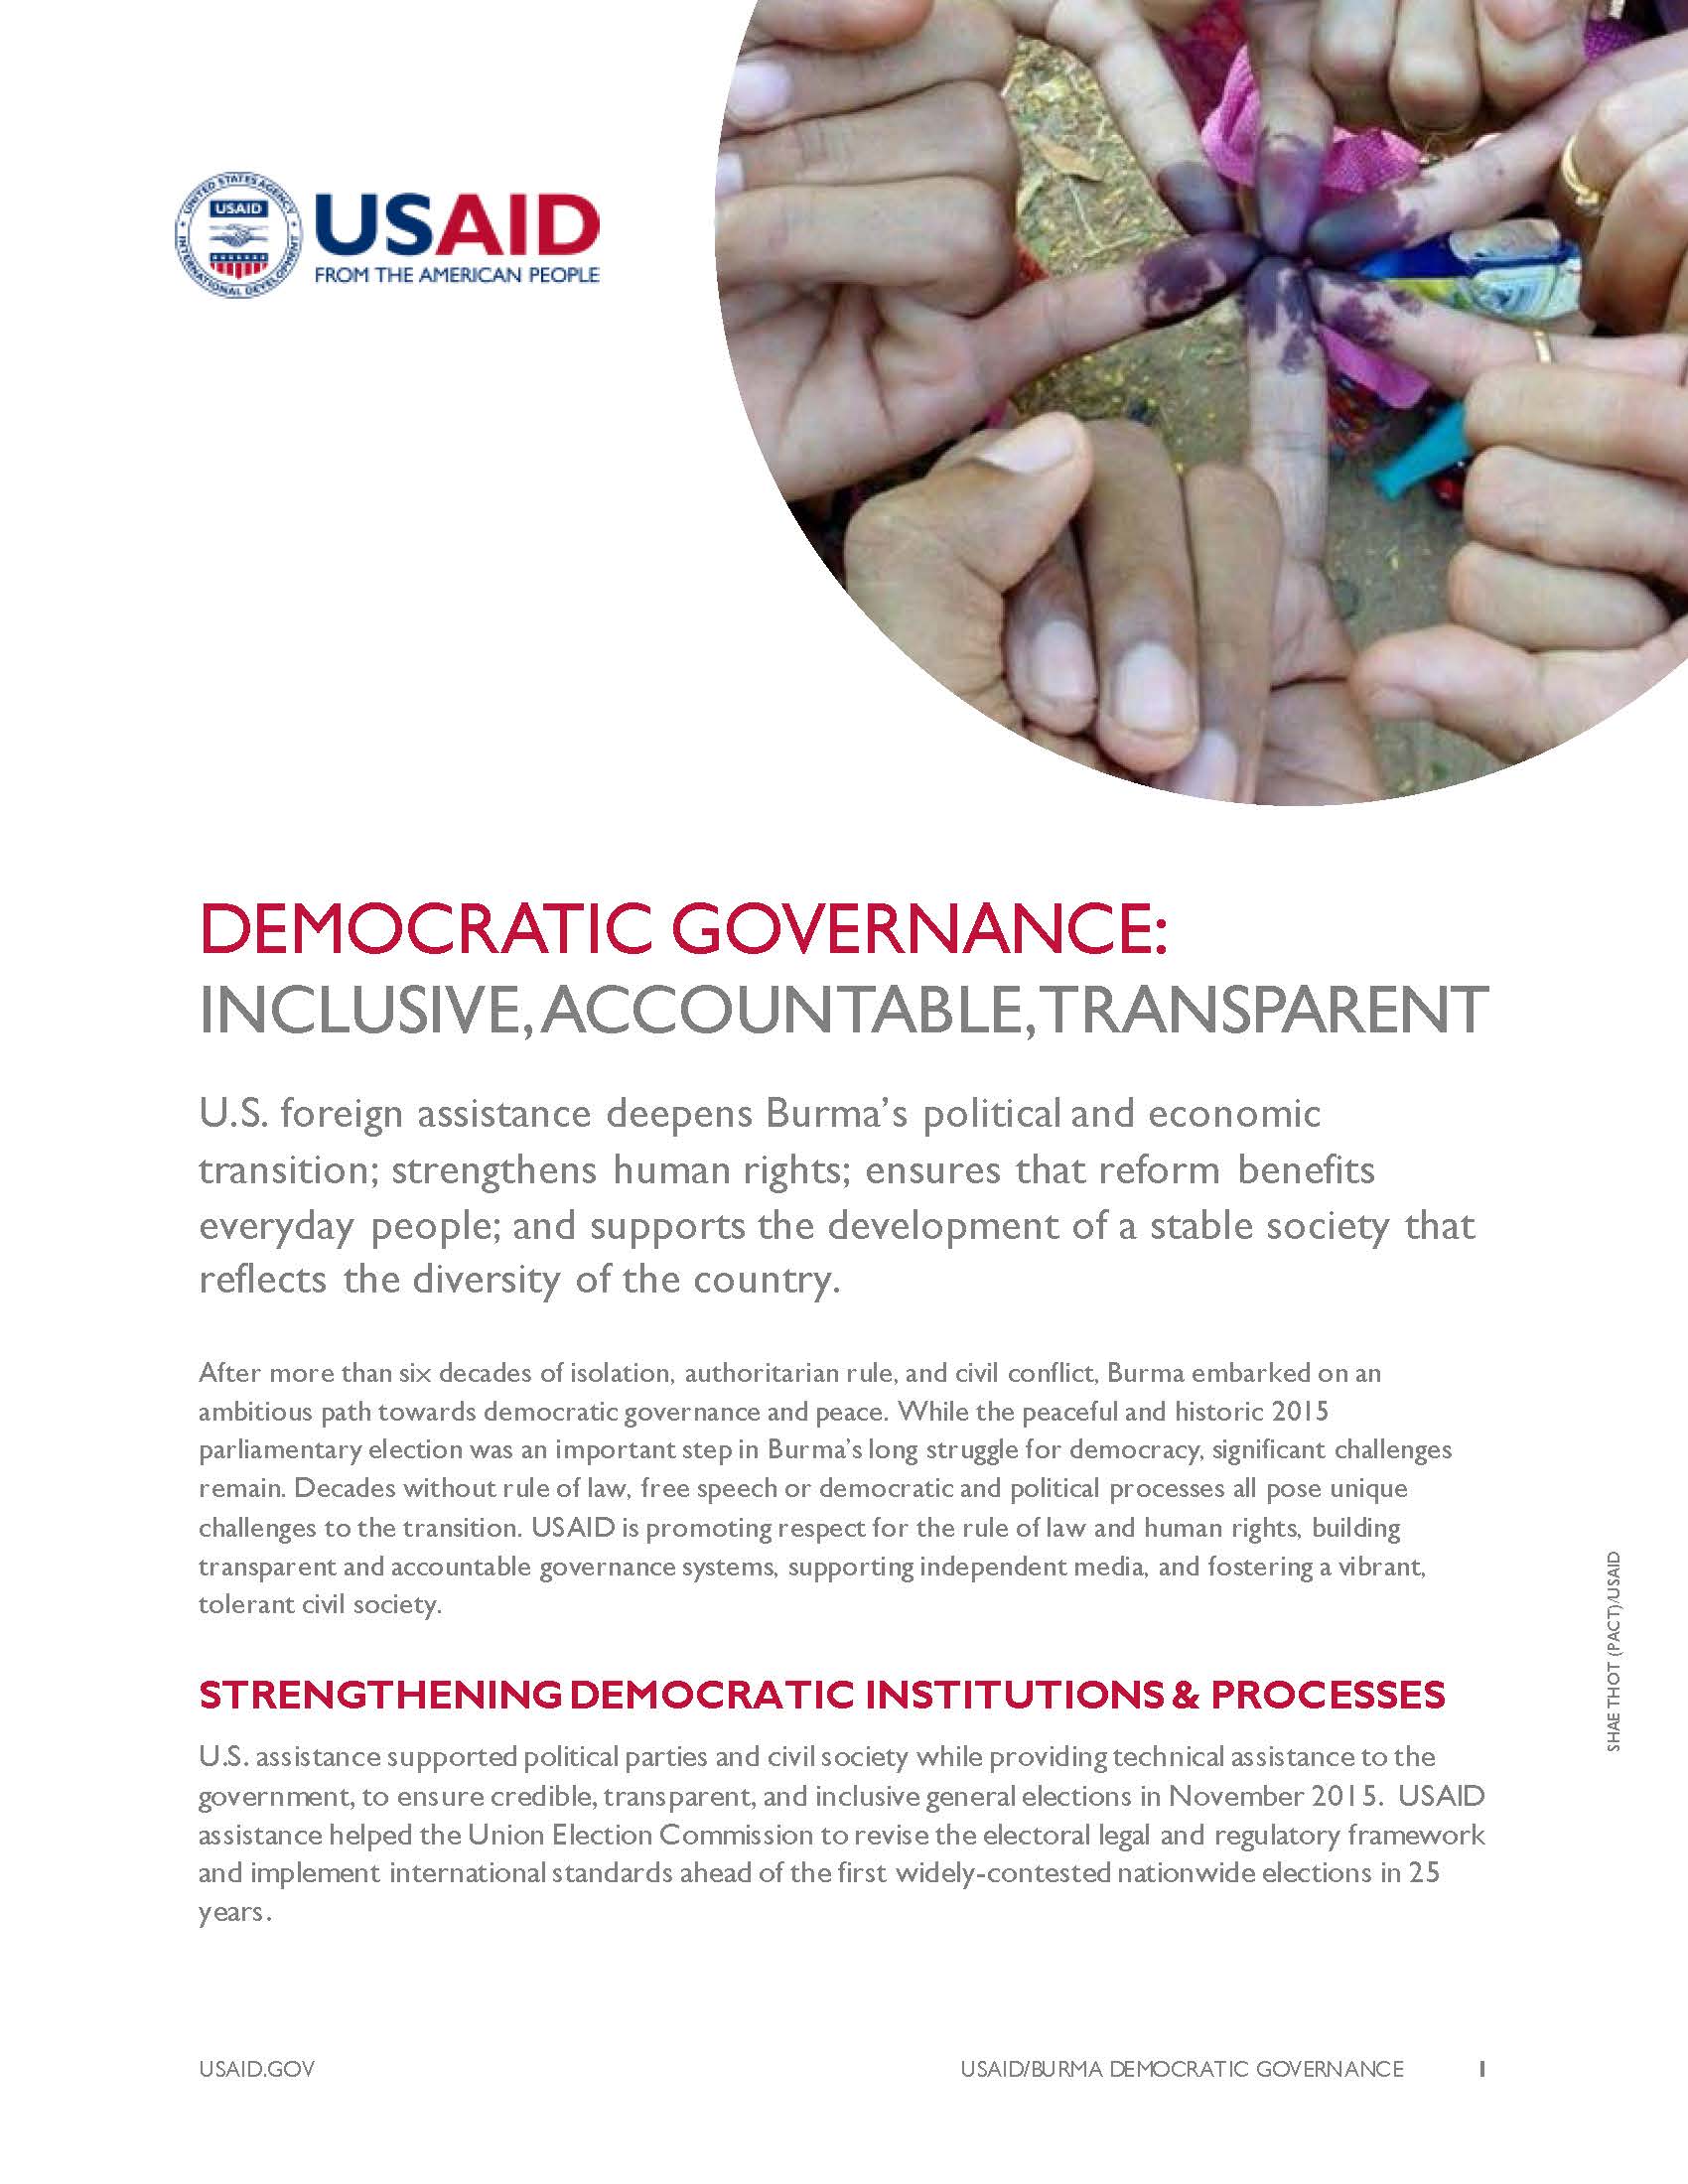 Burma - Democratic Governance Fact Sheet